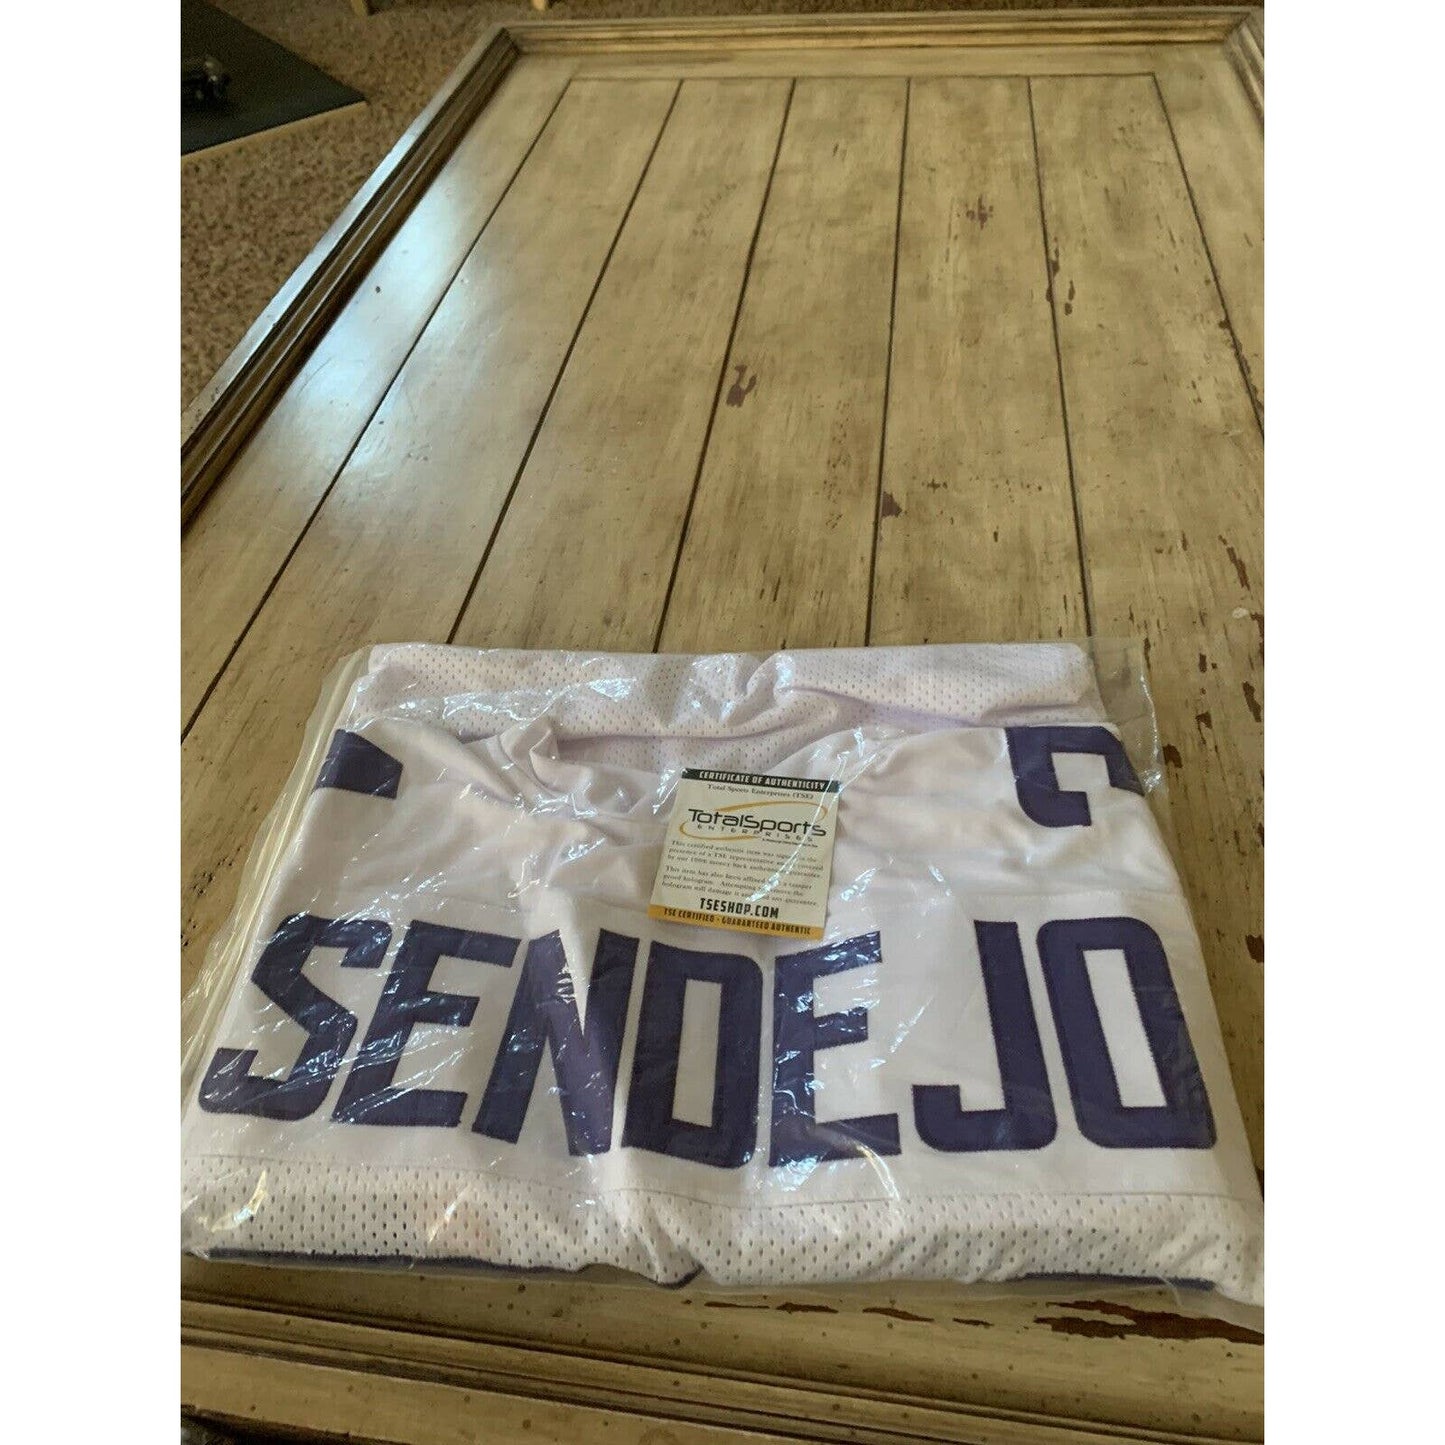 Andrew Sendejo Autographed/Signed Jersey TSE COA Minnesota Vikings Pro Bowler - TreasuresEvolved